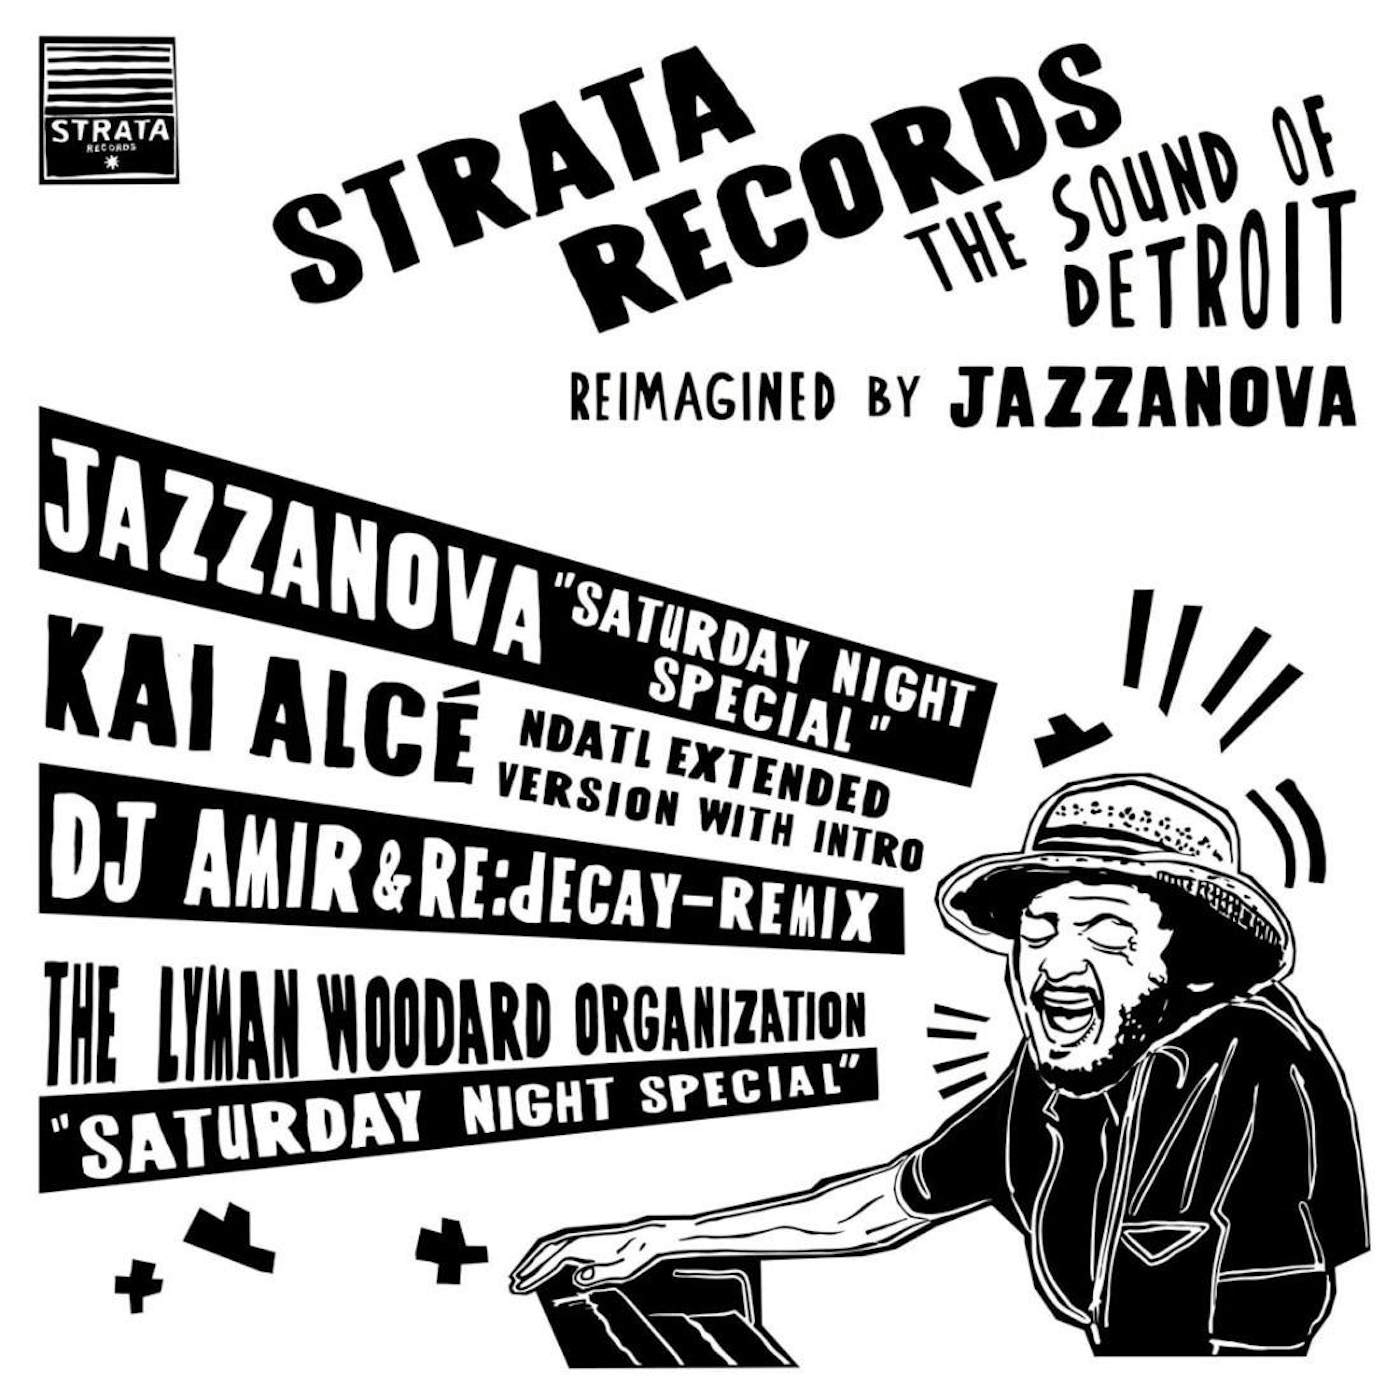 Jazzanova Saturday Night Special (Kai Alcé Ndatl Remix and DJ Amir & Re.Decay Remix) Vinyl Record